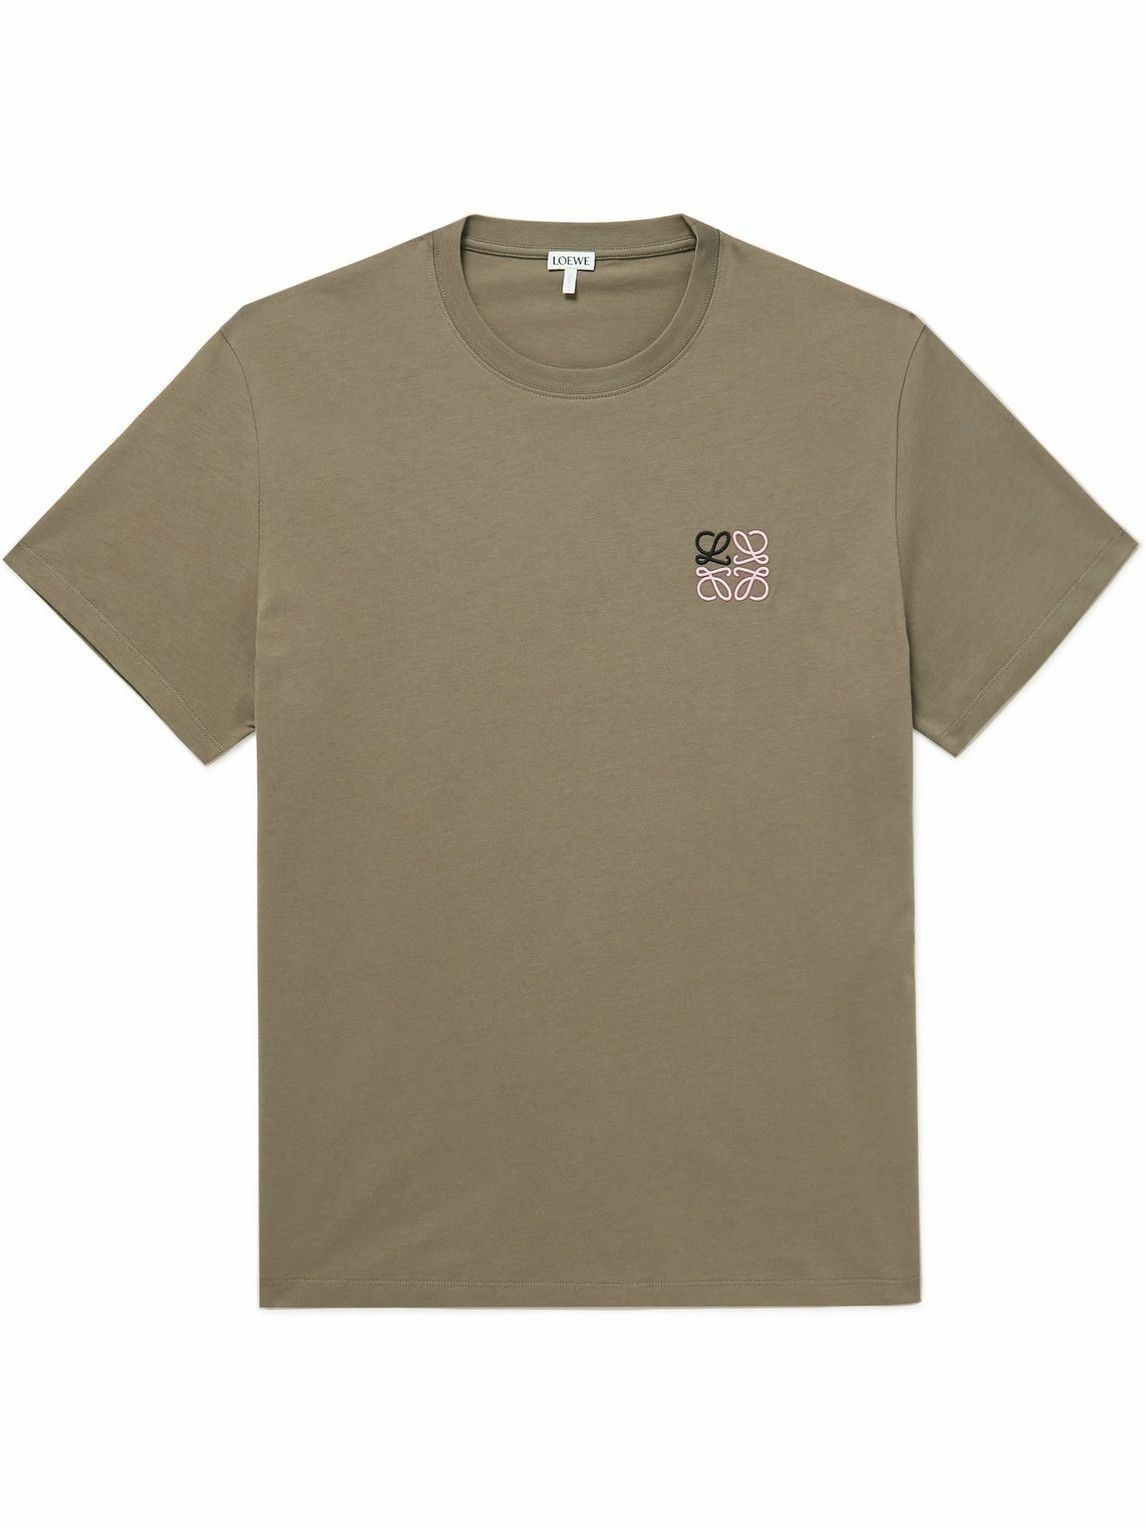 LOEWE - Logo-Embroidered Cotton-Jersey T-Shirt - Gray Loewe